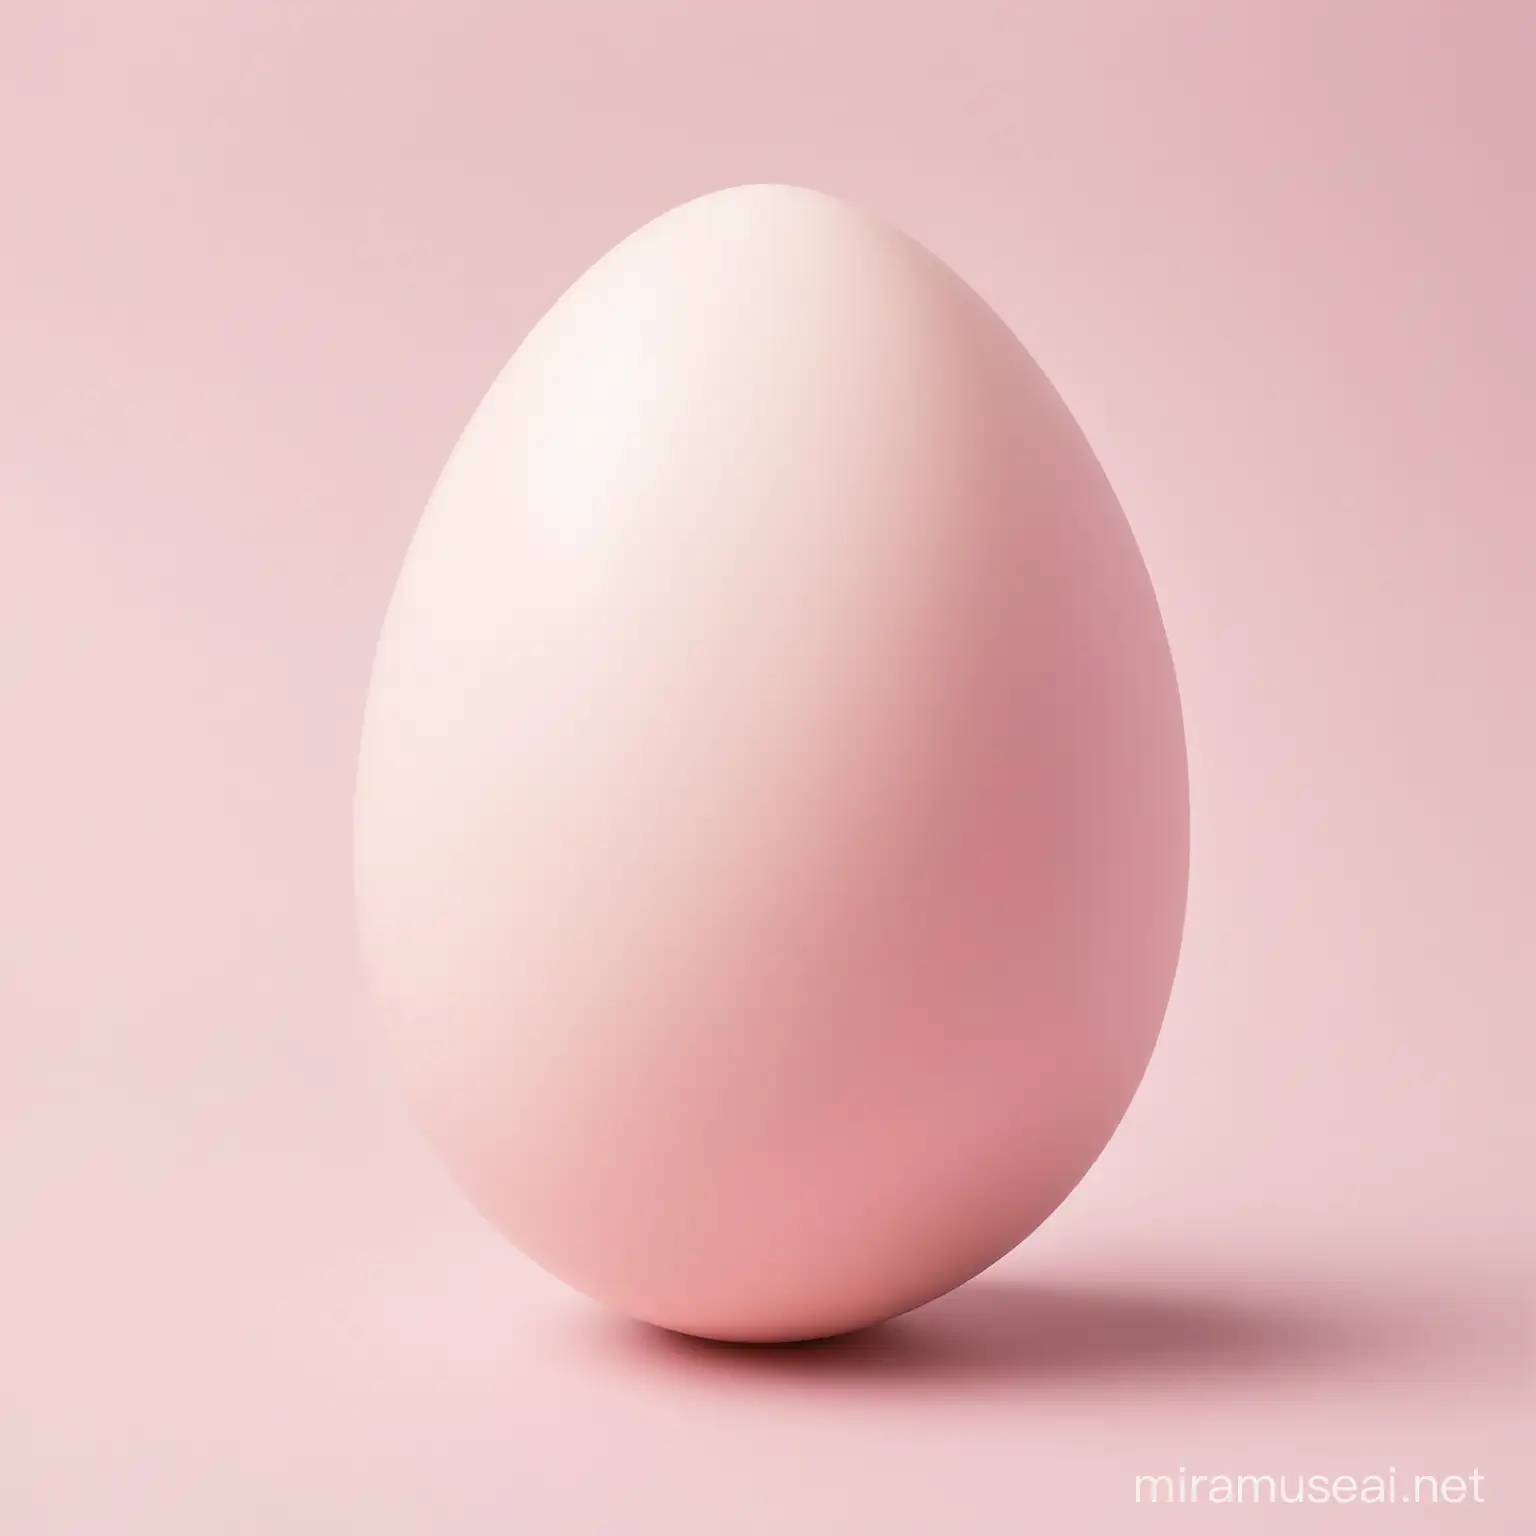 Pale pink egg